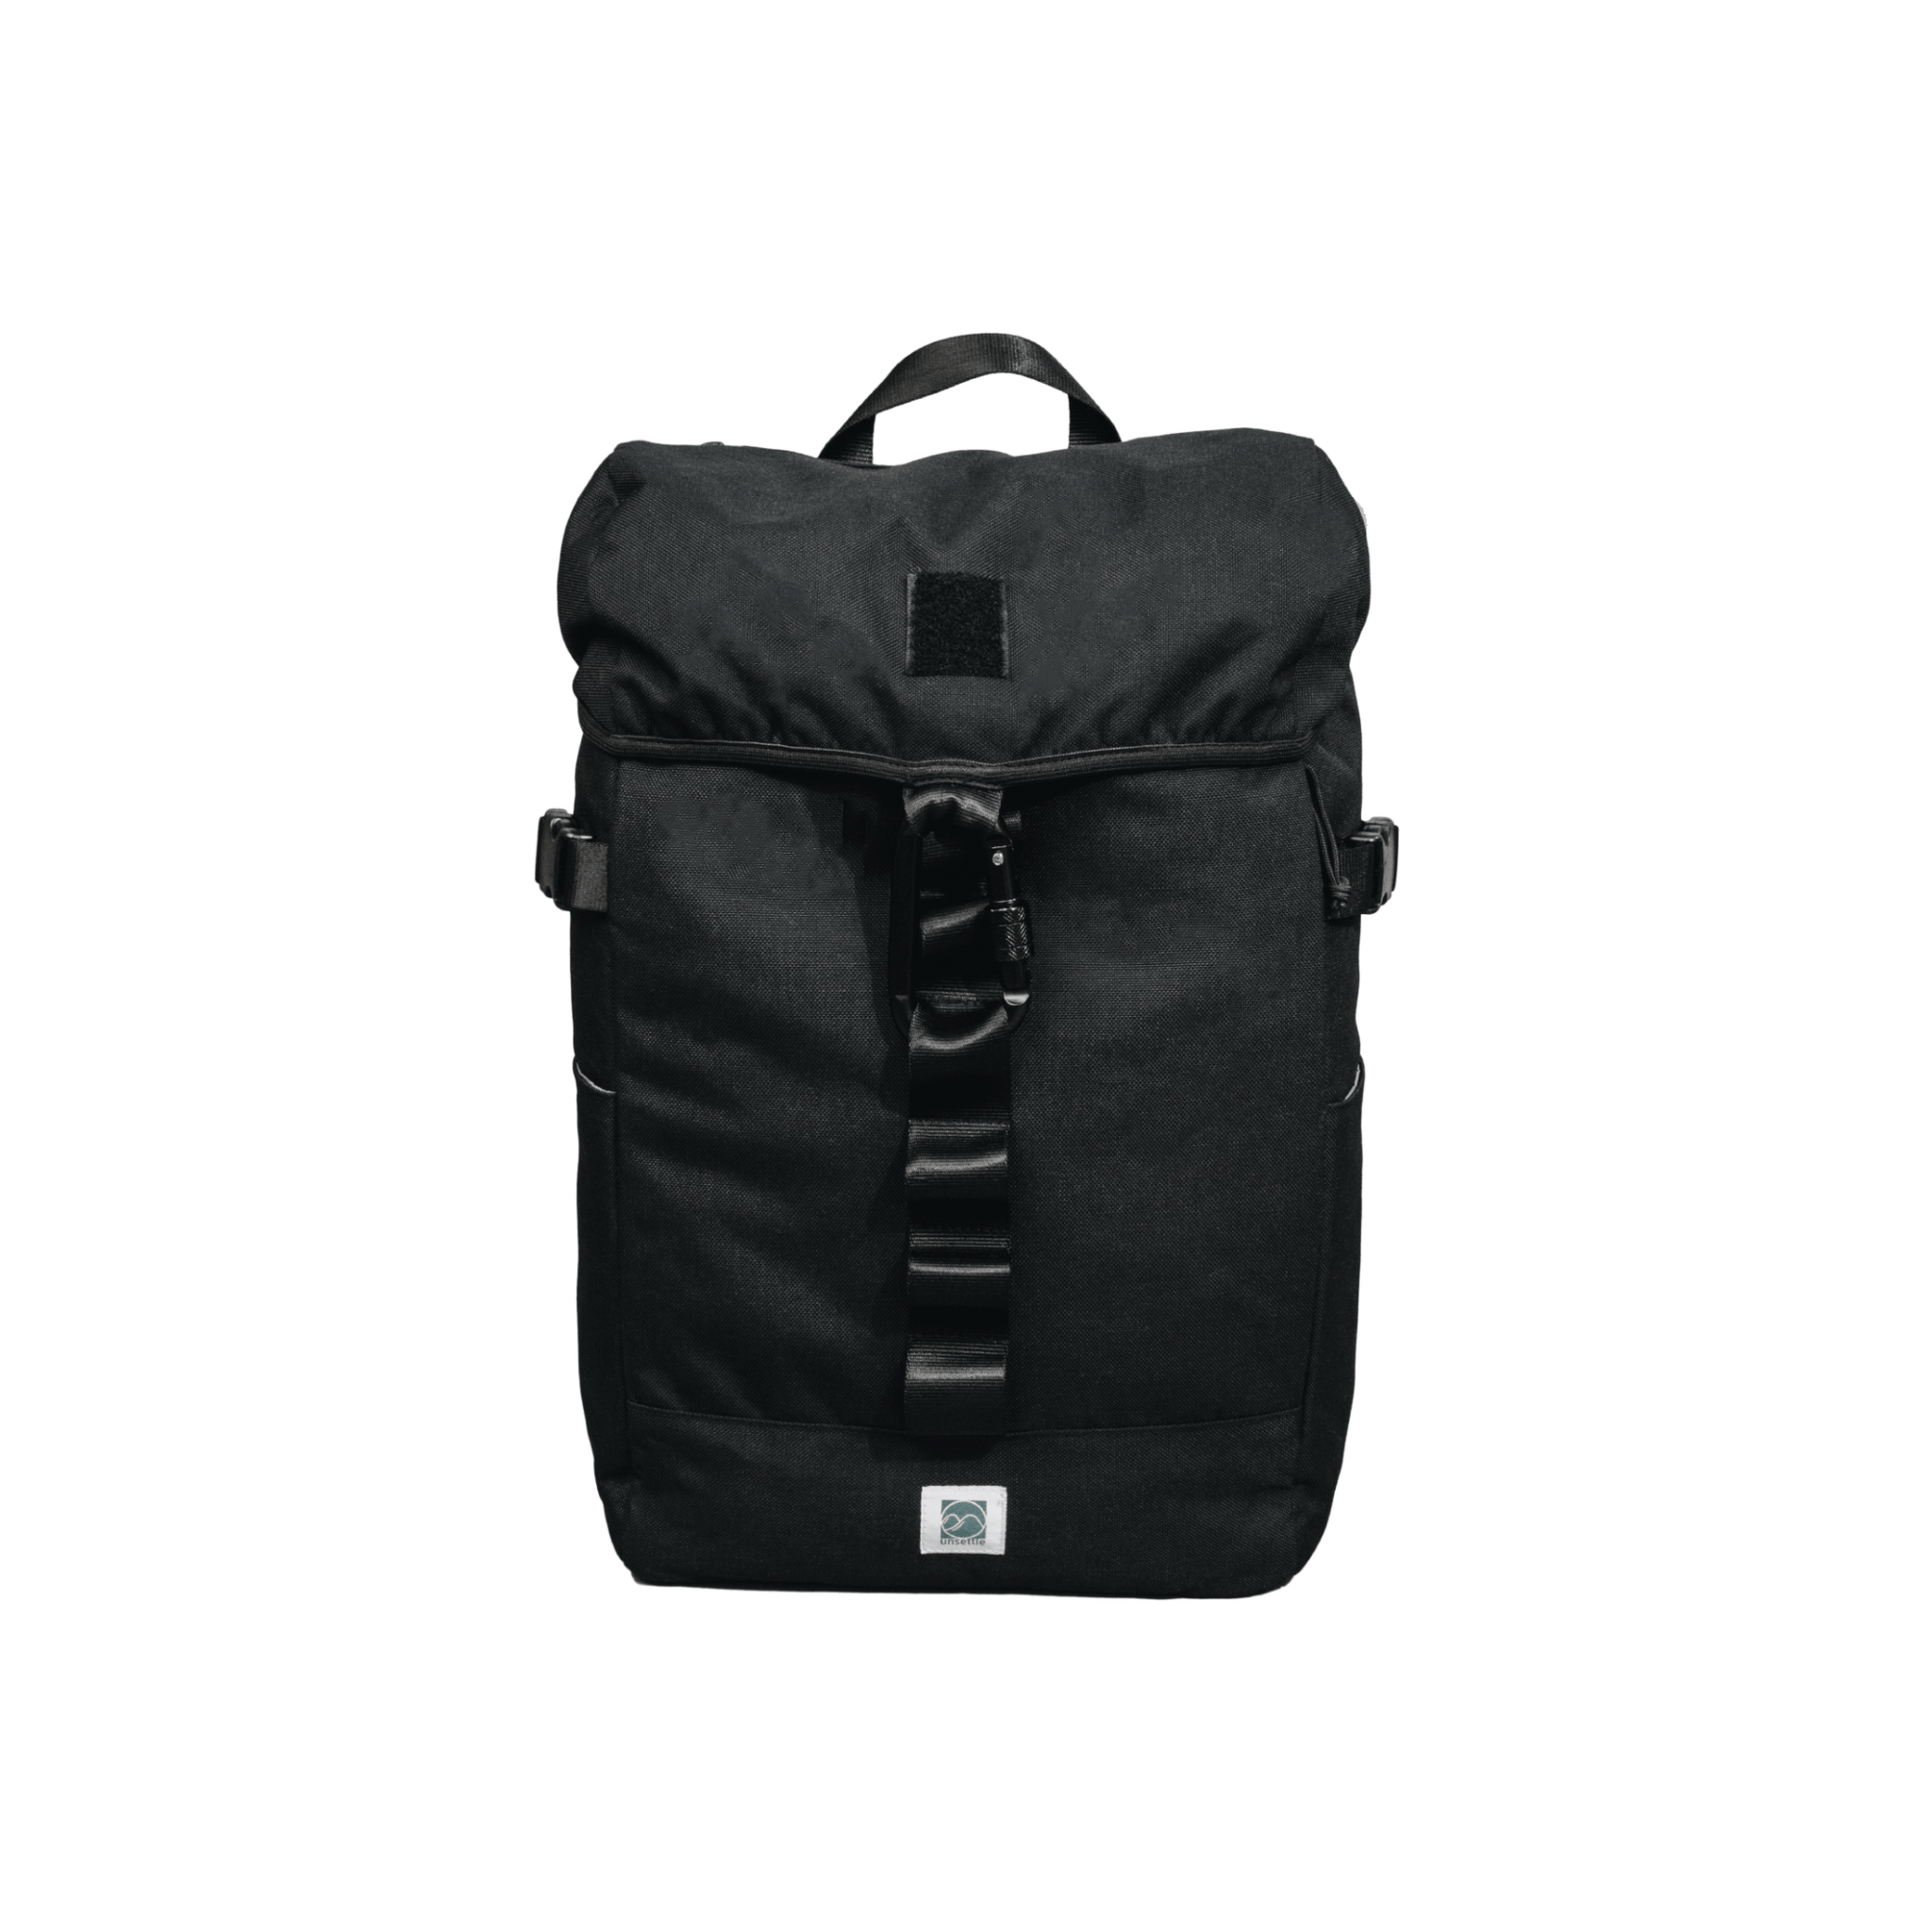 black-rucksack-backpack-with-carabiner